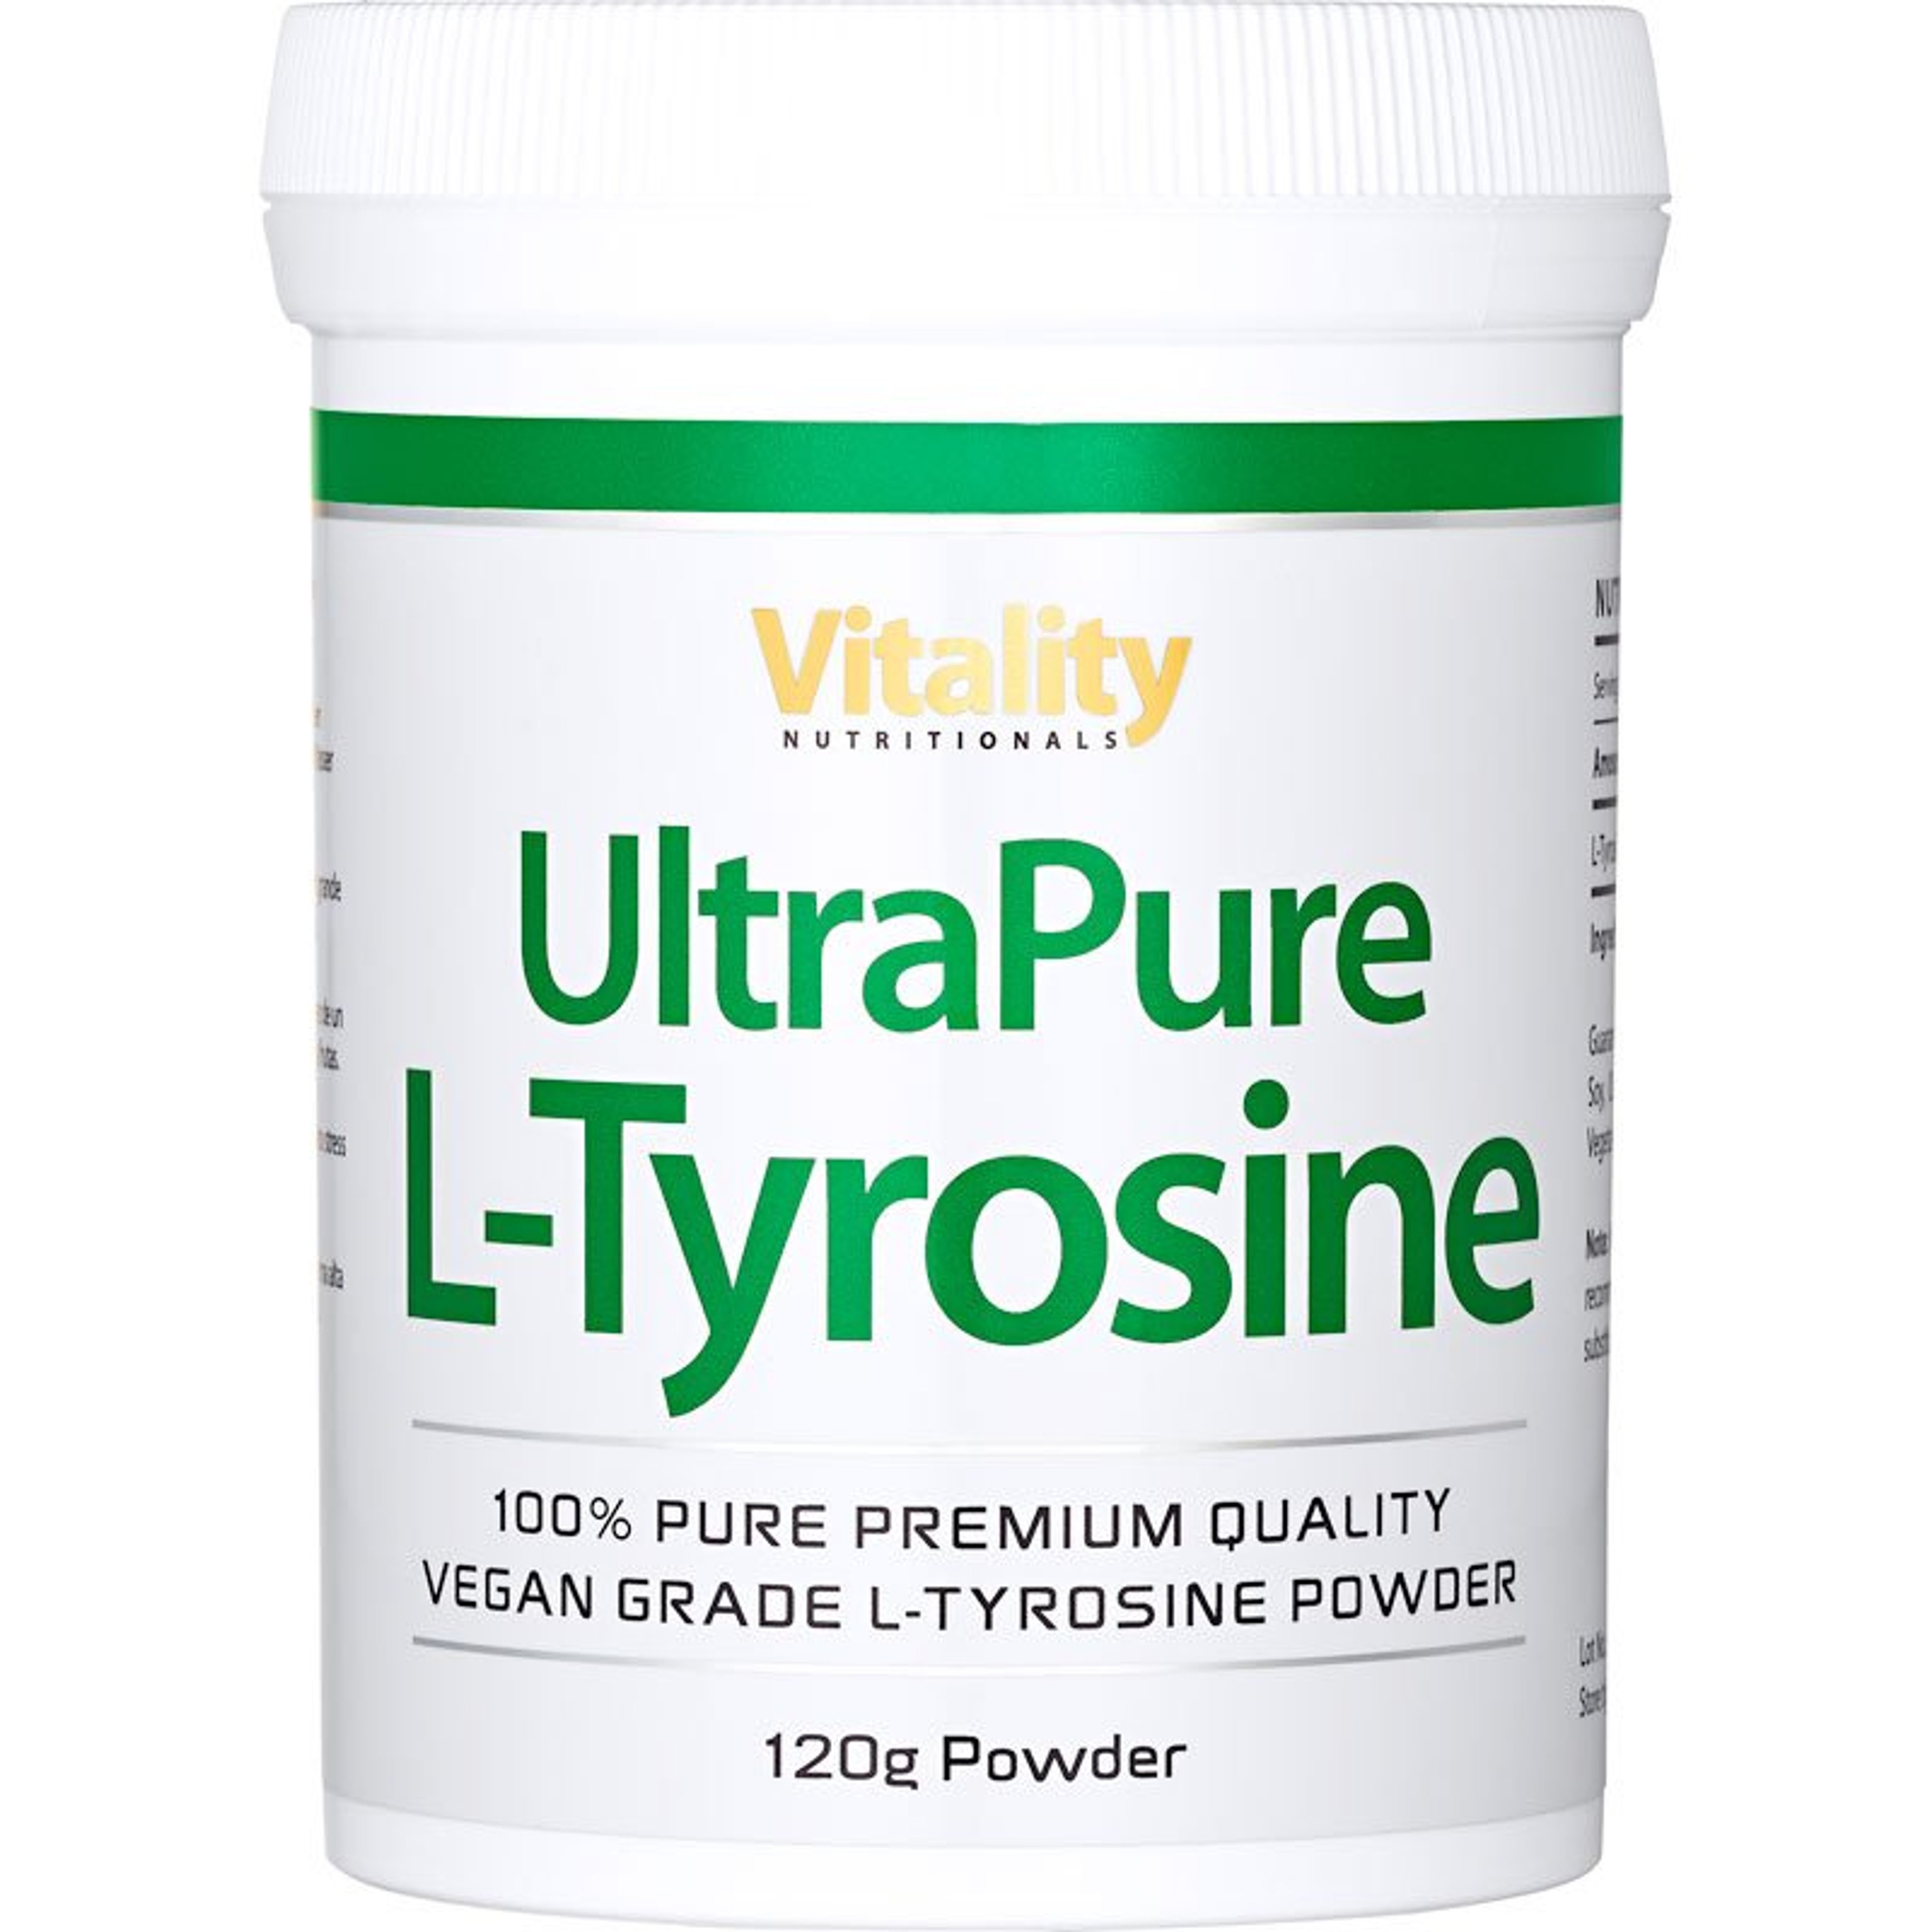 UltraPure L-Tyrosine - 120 g Powder